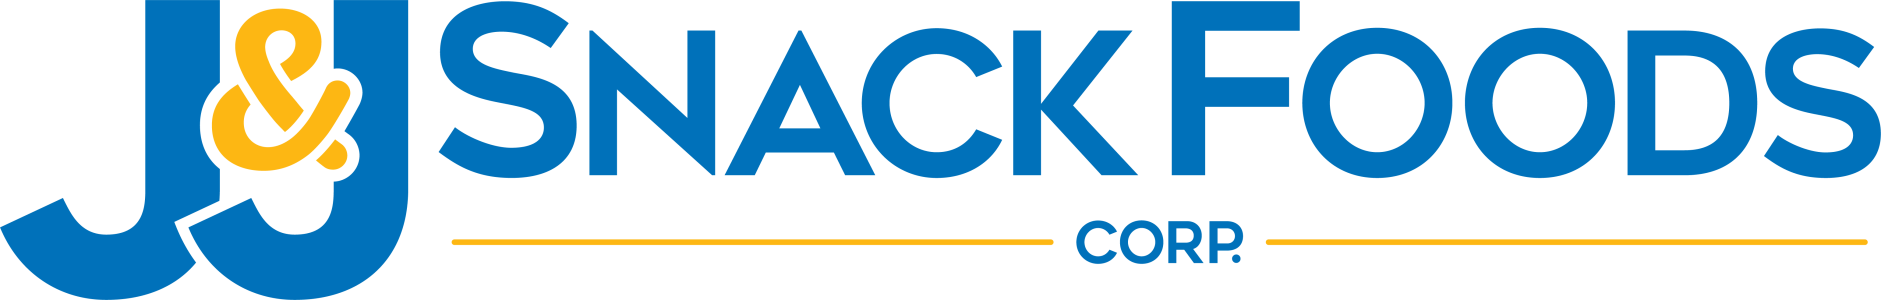 JJ Snack Food Corp-Logo